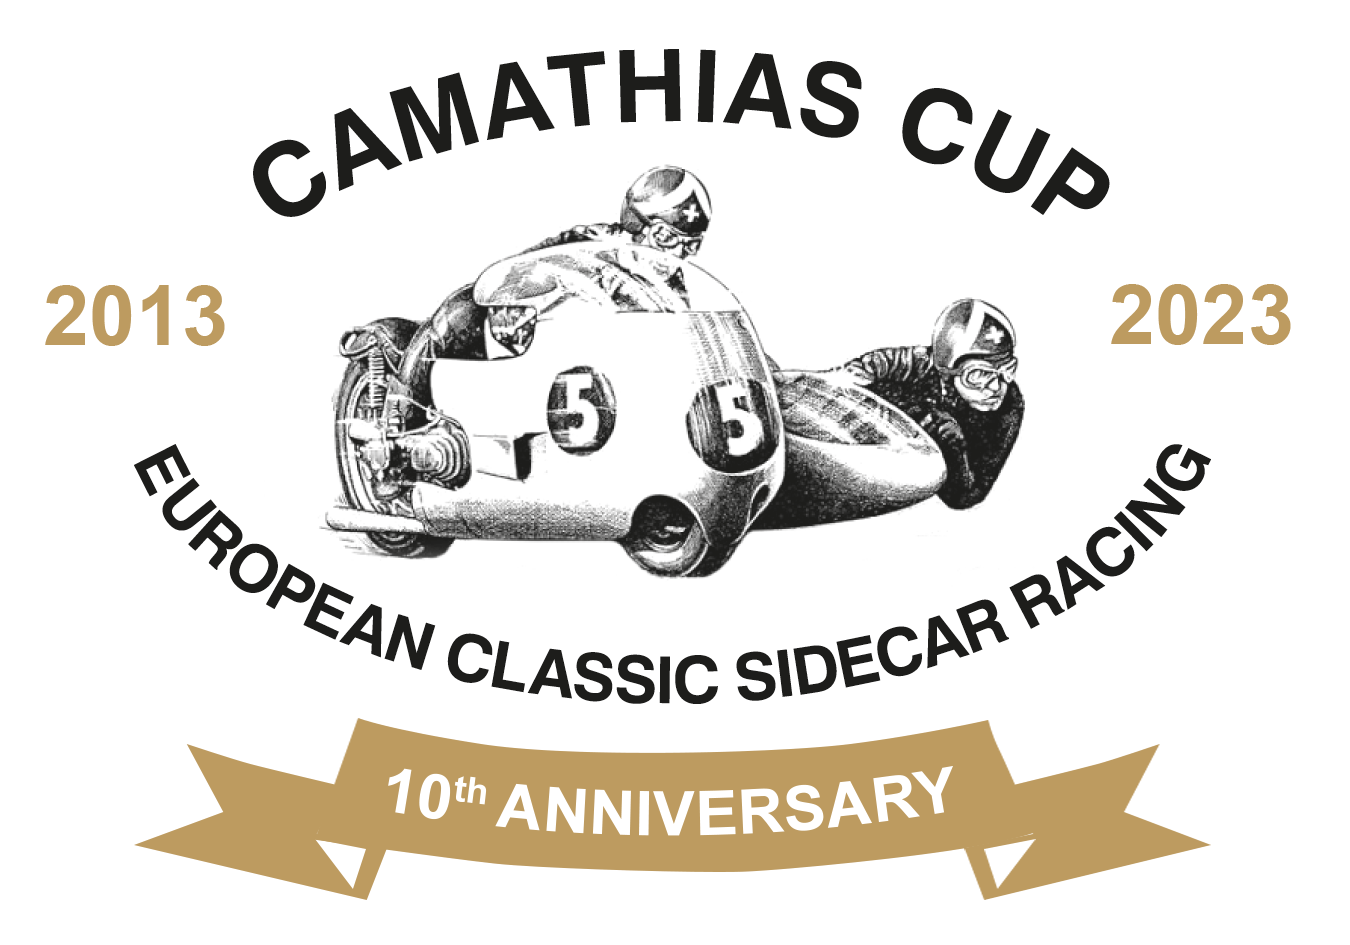 Camathias Cup